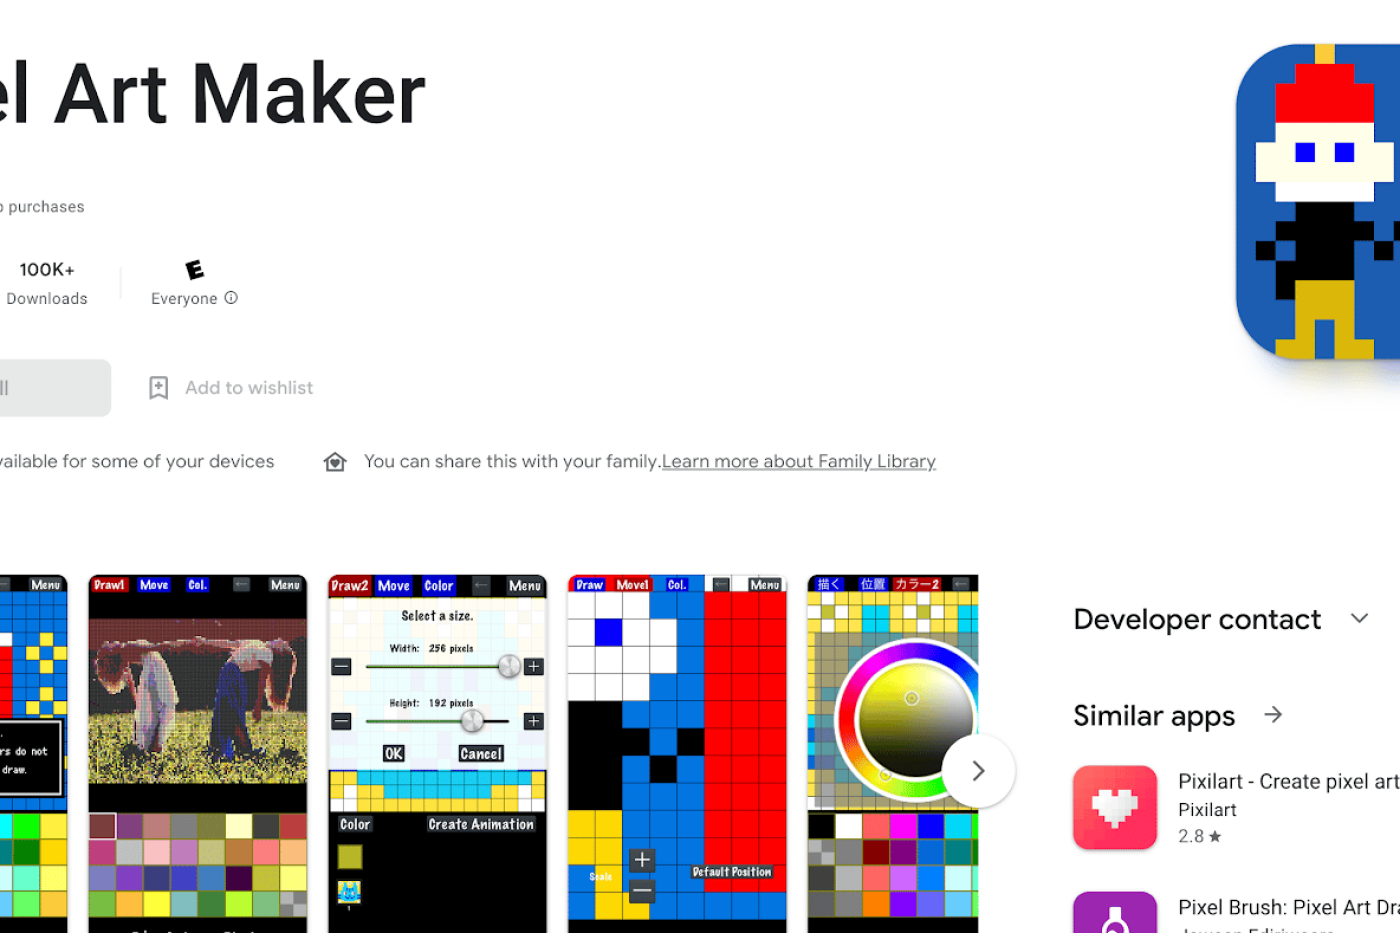 Pixel Art Generator Pixel Art Maker: A Review 2023